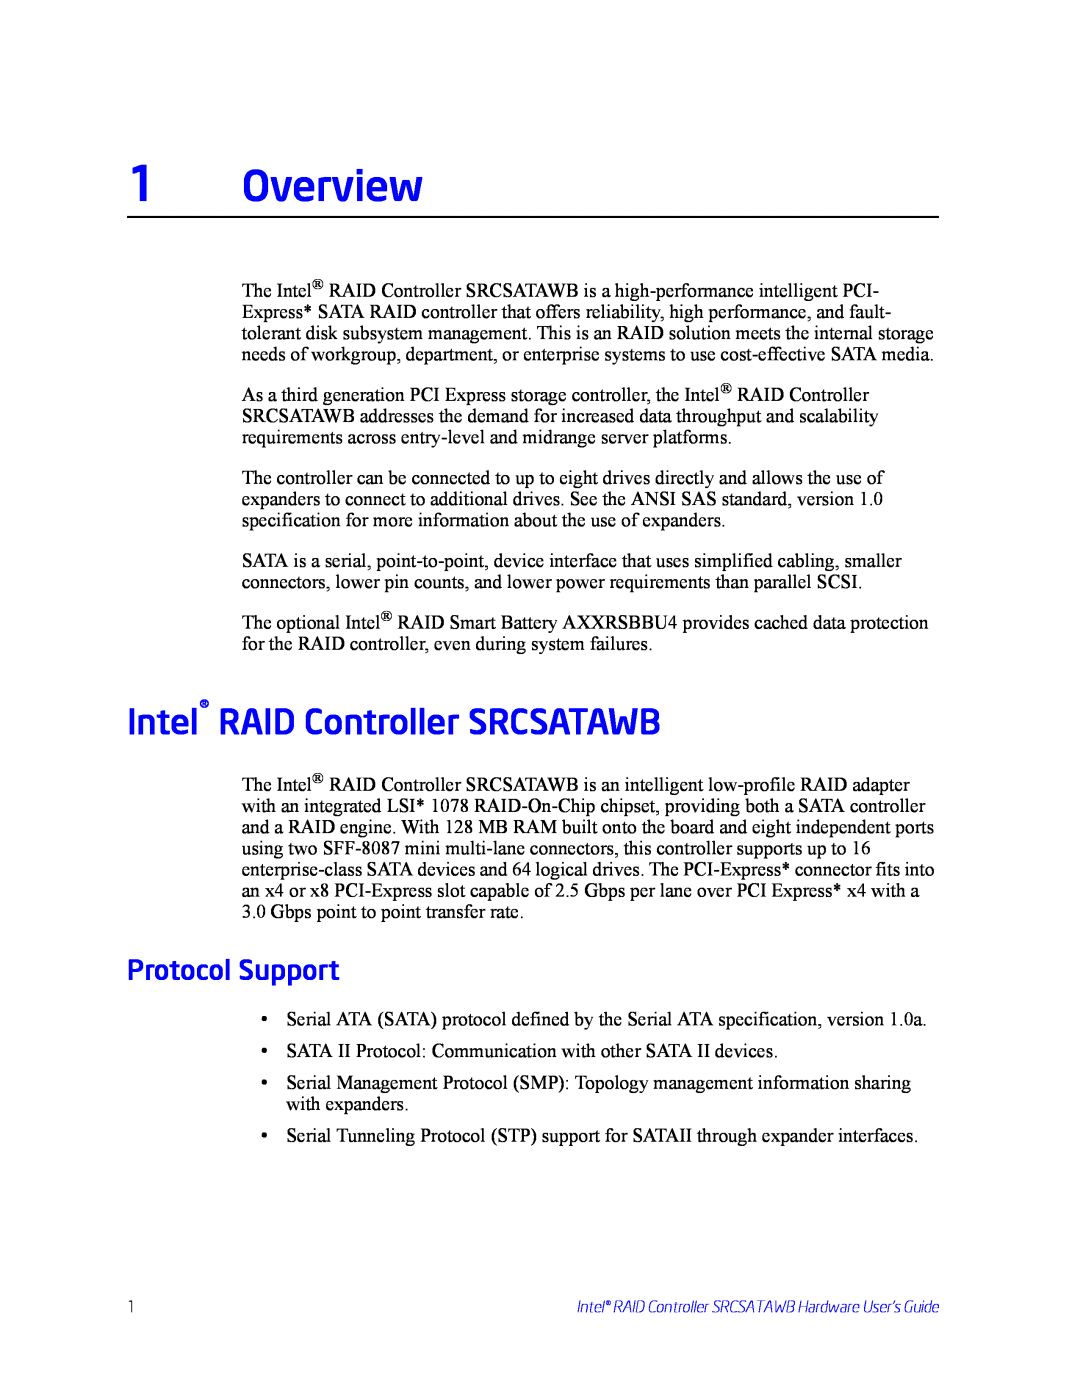 Intel manual 1Overview, Intel RAID Controller SRCSATAWB, Protocol Support 